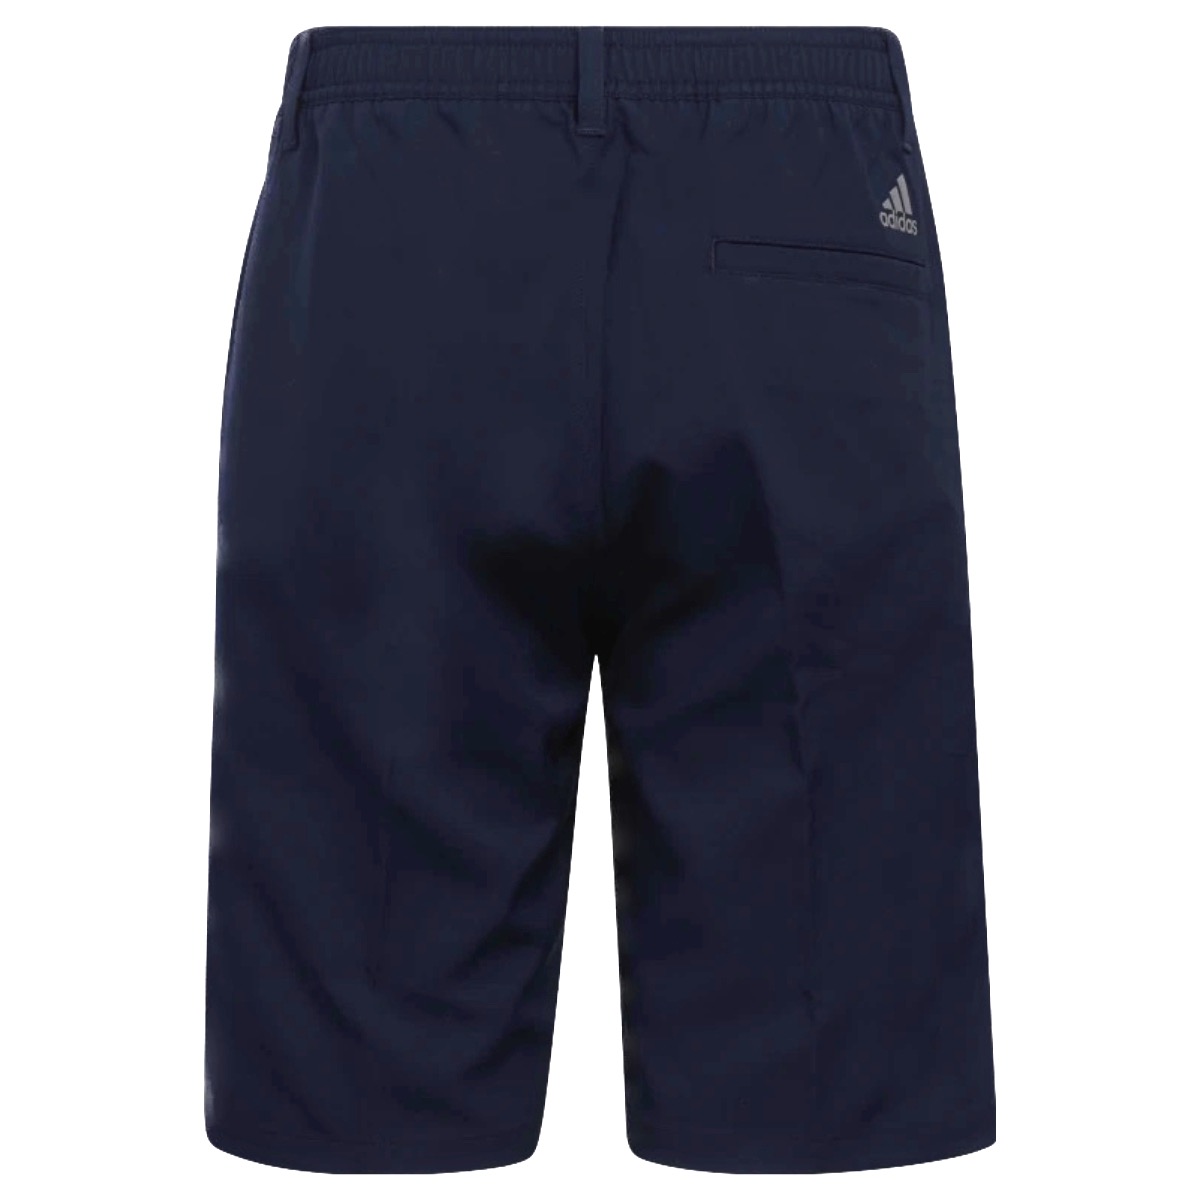 Adidas Boys Ultimate365 Shorts Navy